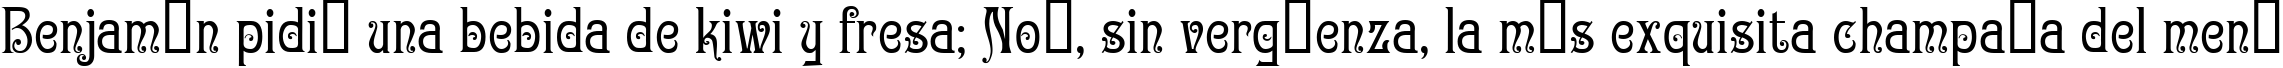 Пример написания шрифтом Gertruda Victoriana Normal текста на испанском